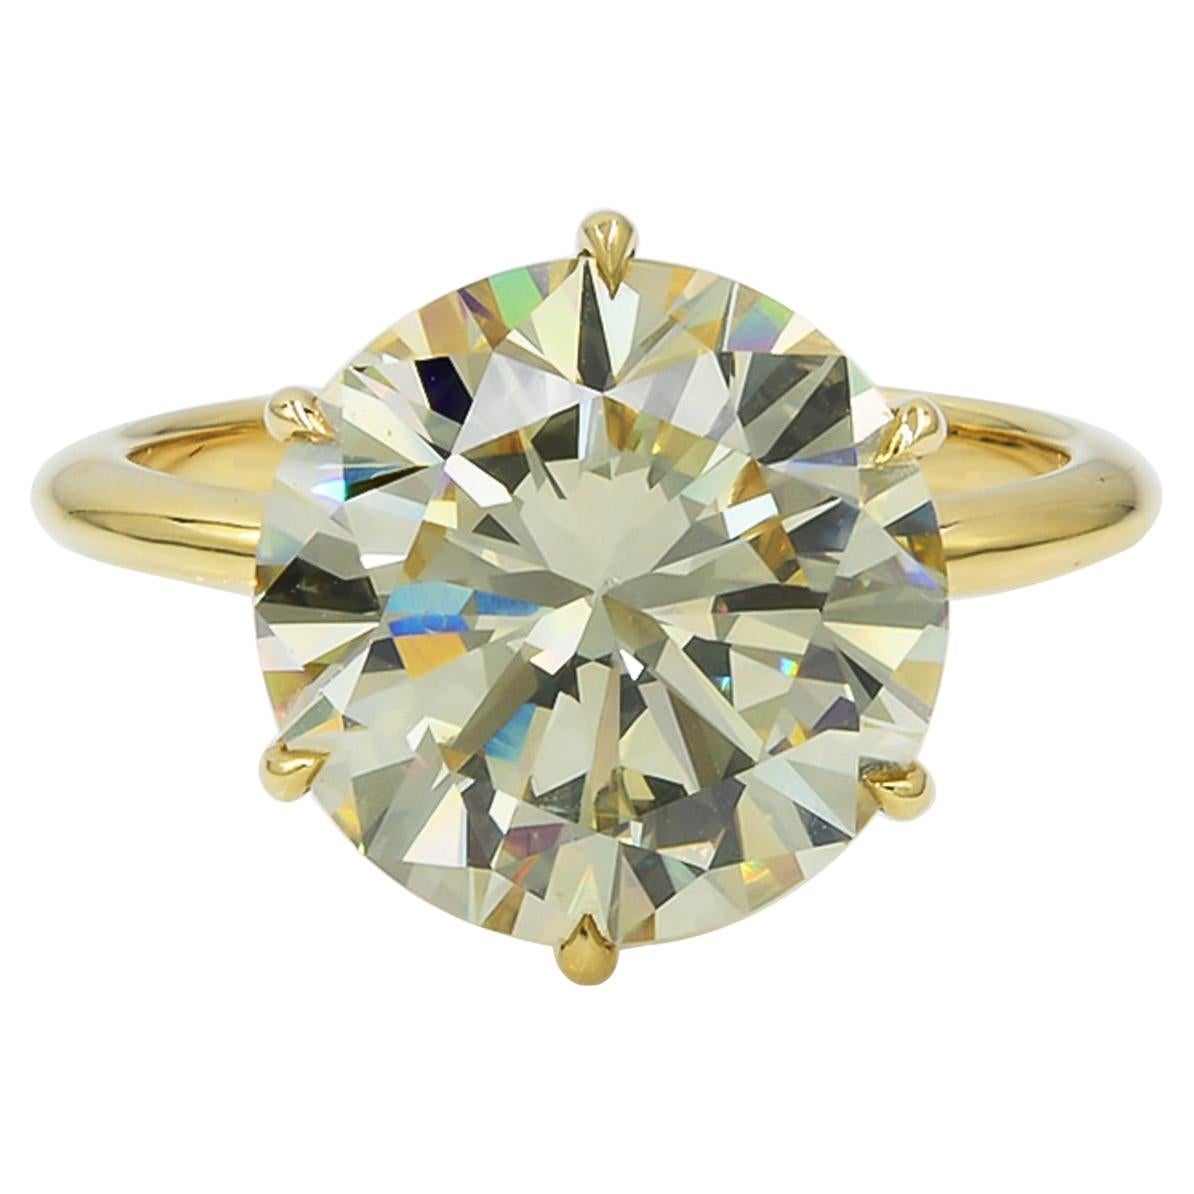 Spectra Fine Jewelry, 5.55 Carat Diamond Solitaire Ring